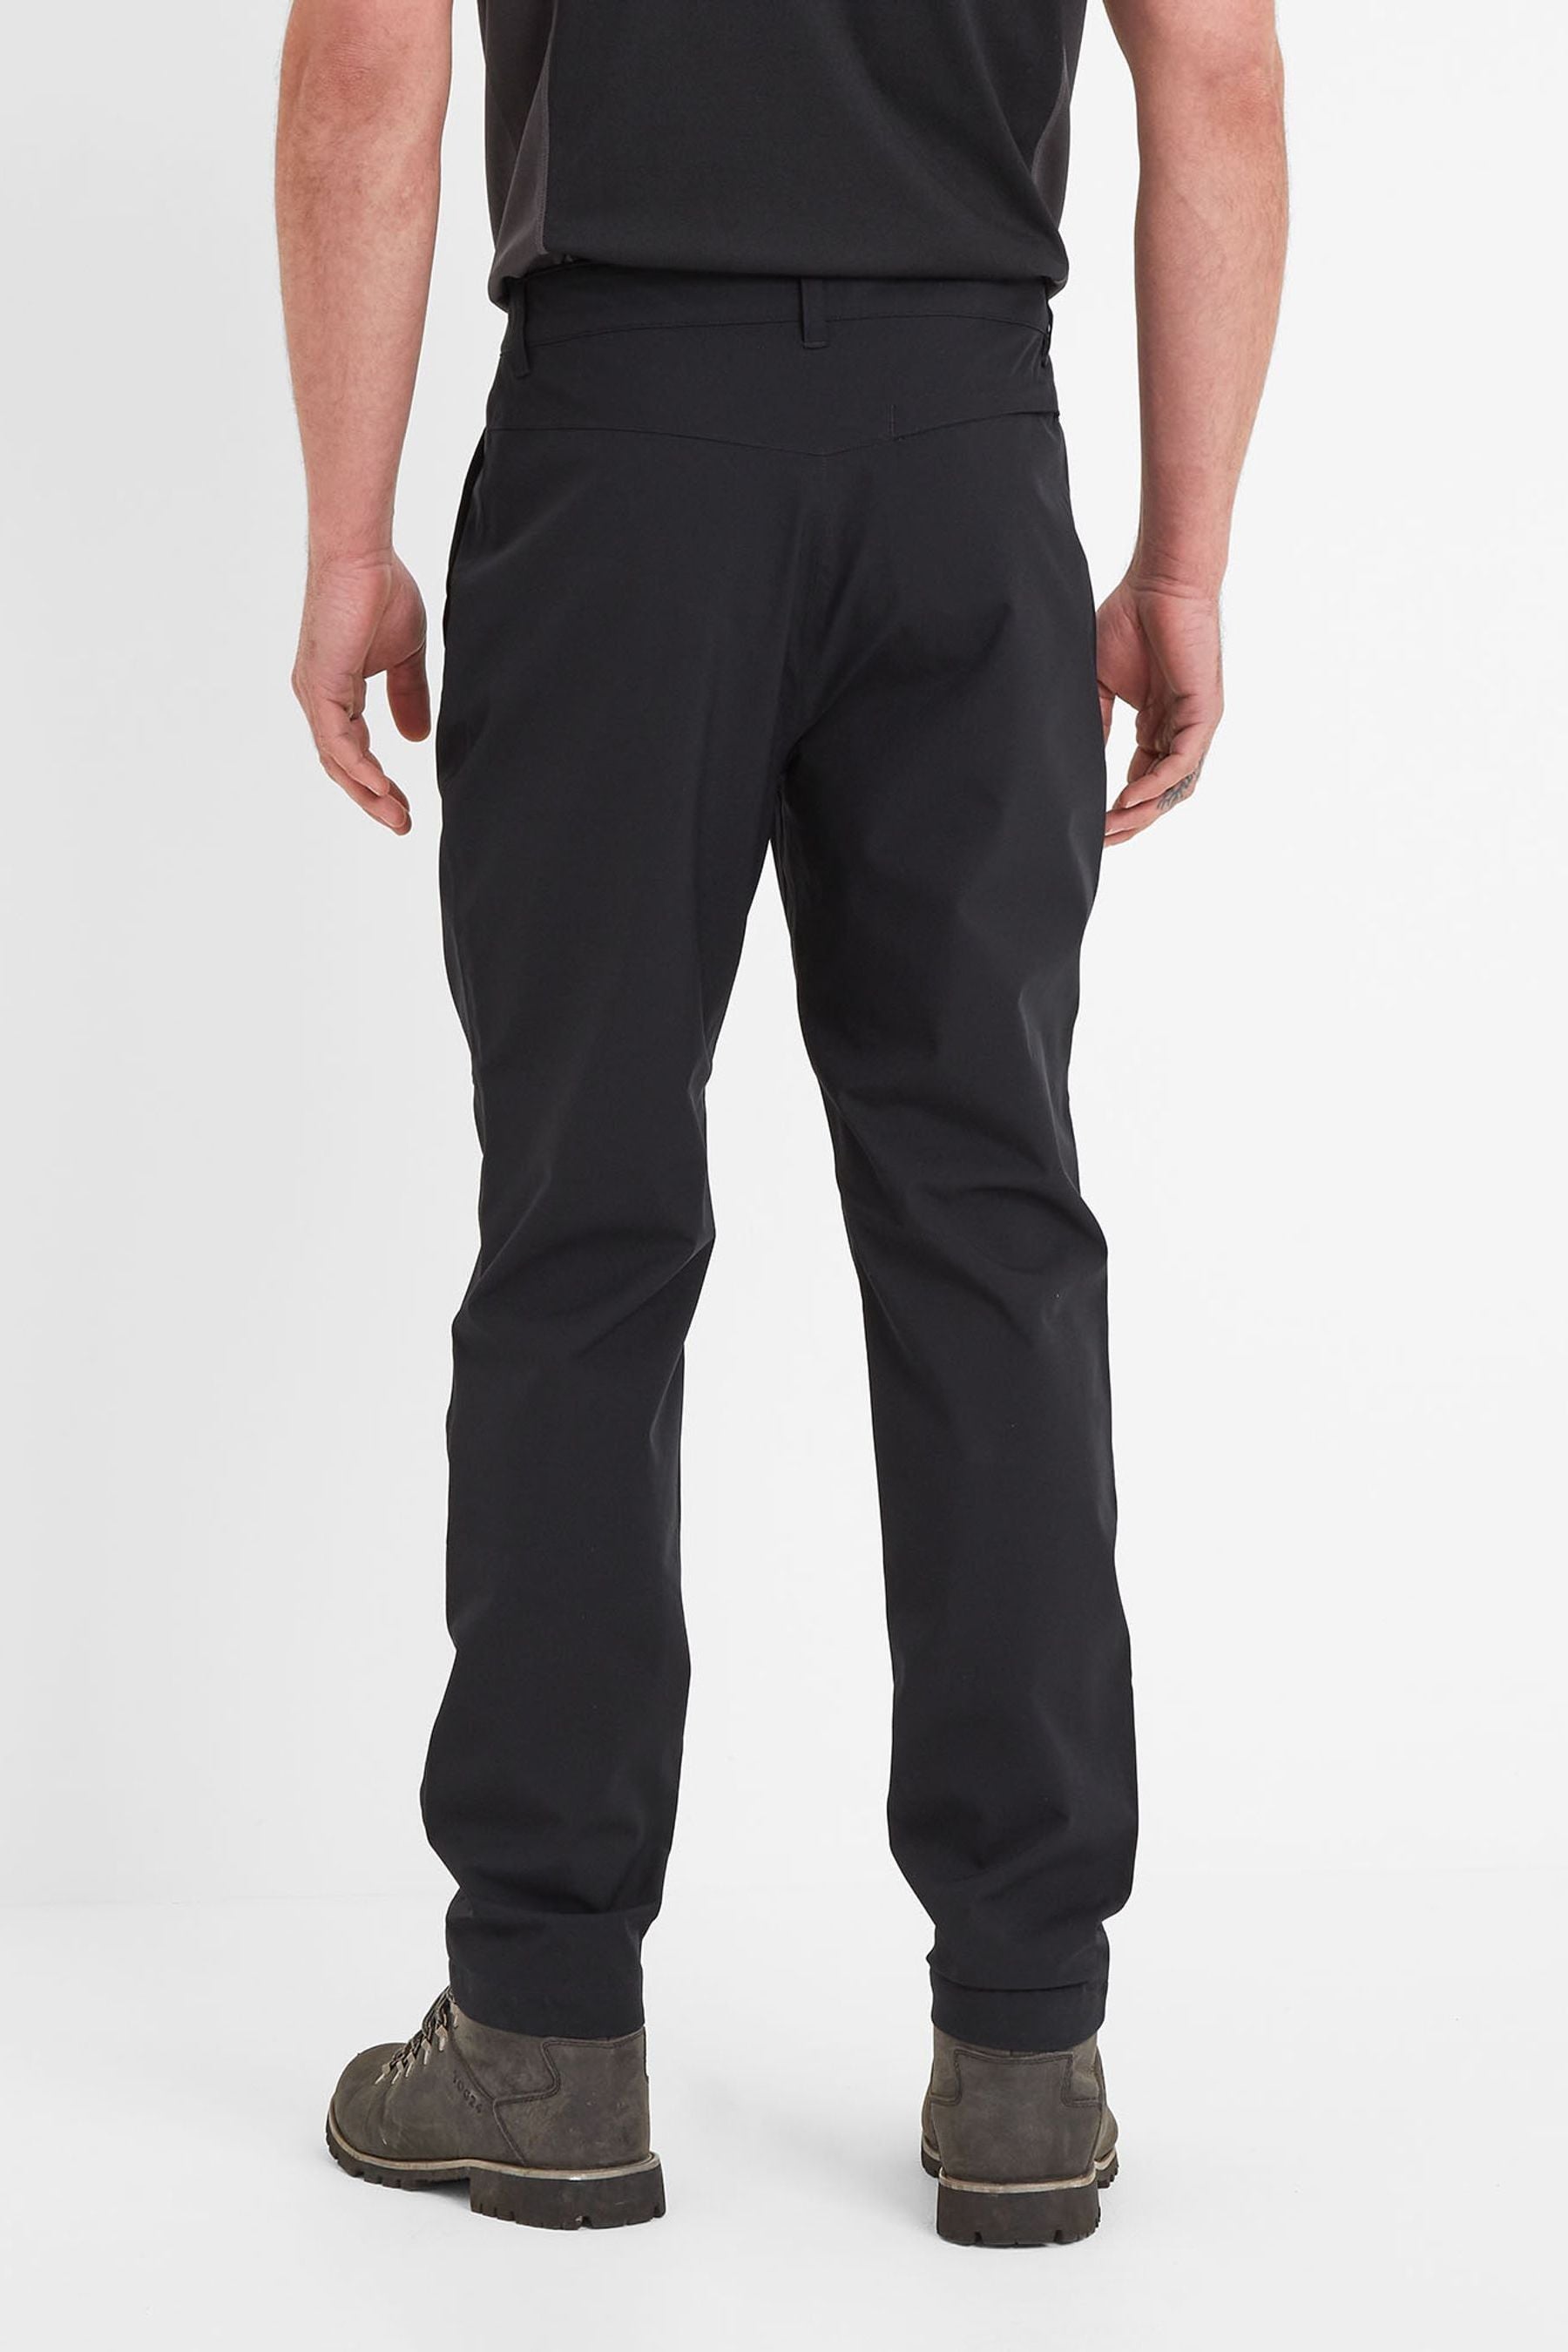 Buy Tog 24 Black Silsden Mens Waterproof Trousers from the Next UK ...